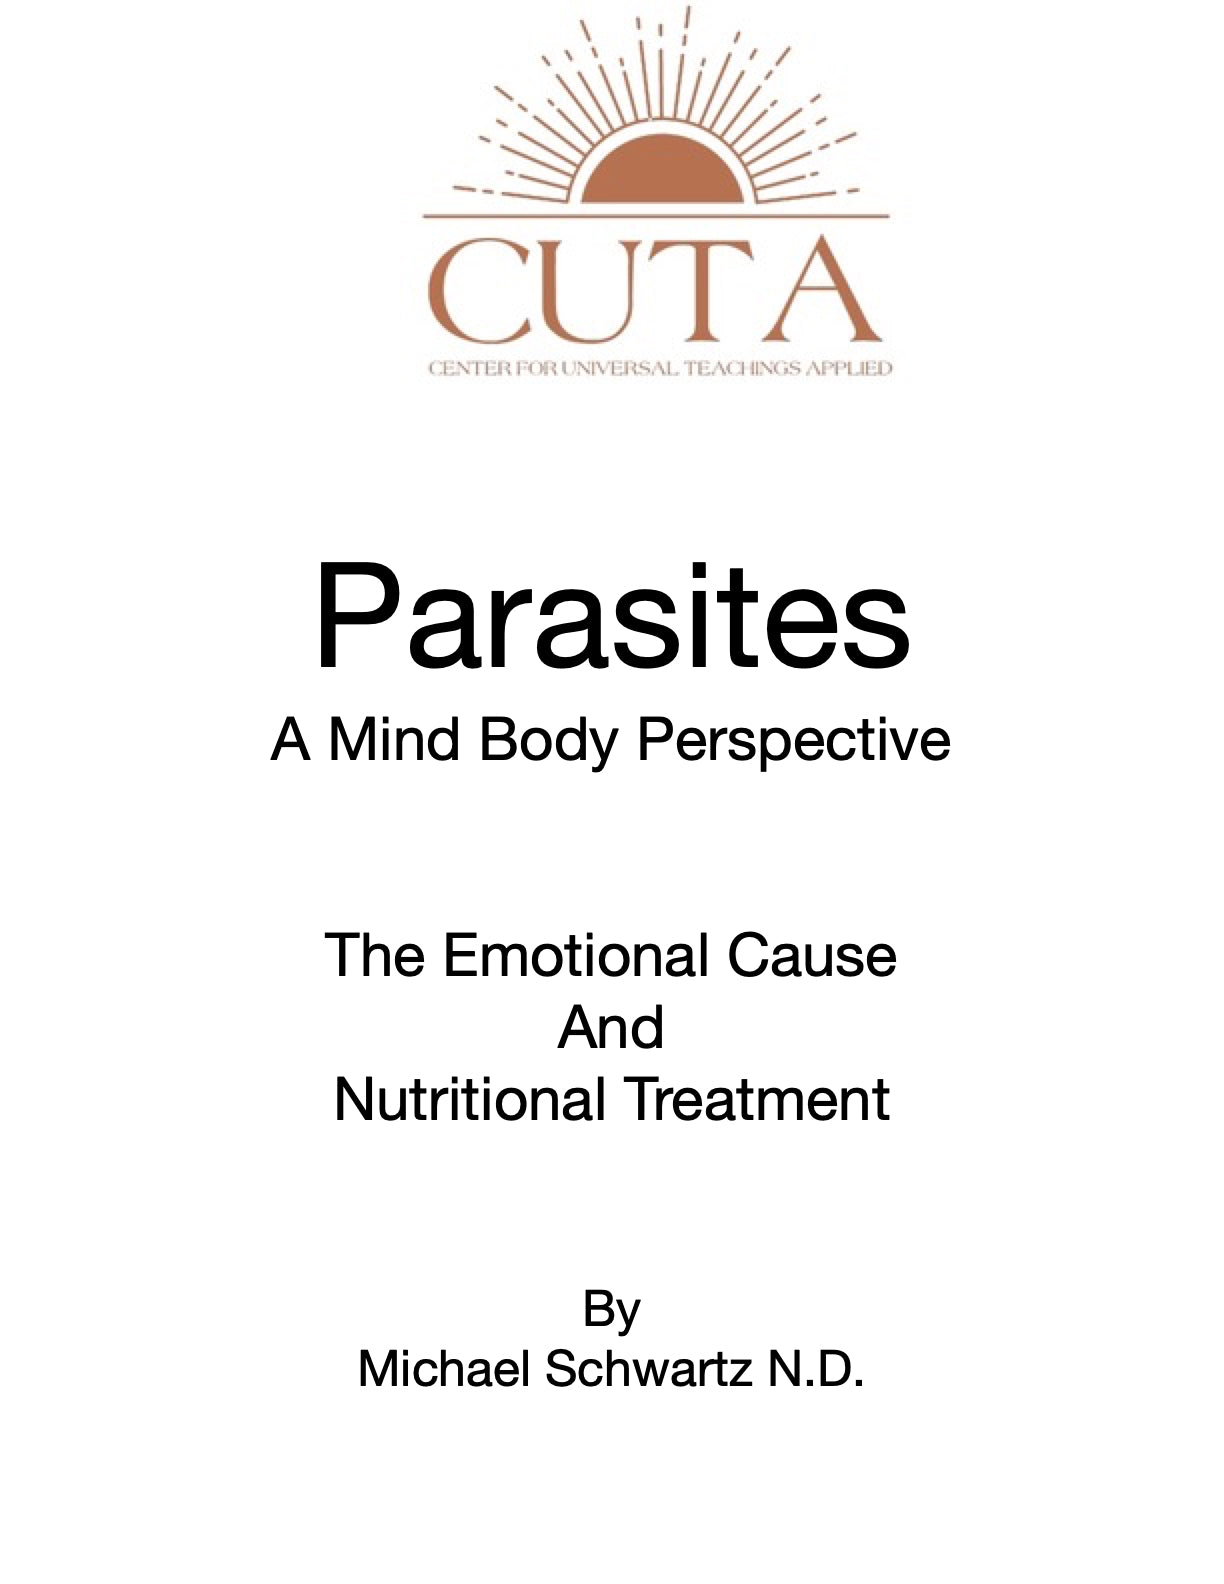 Parasites Booklet